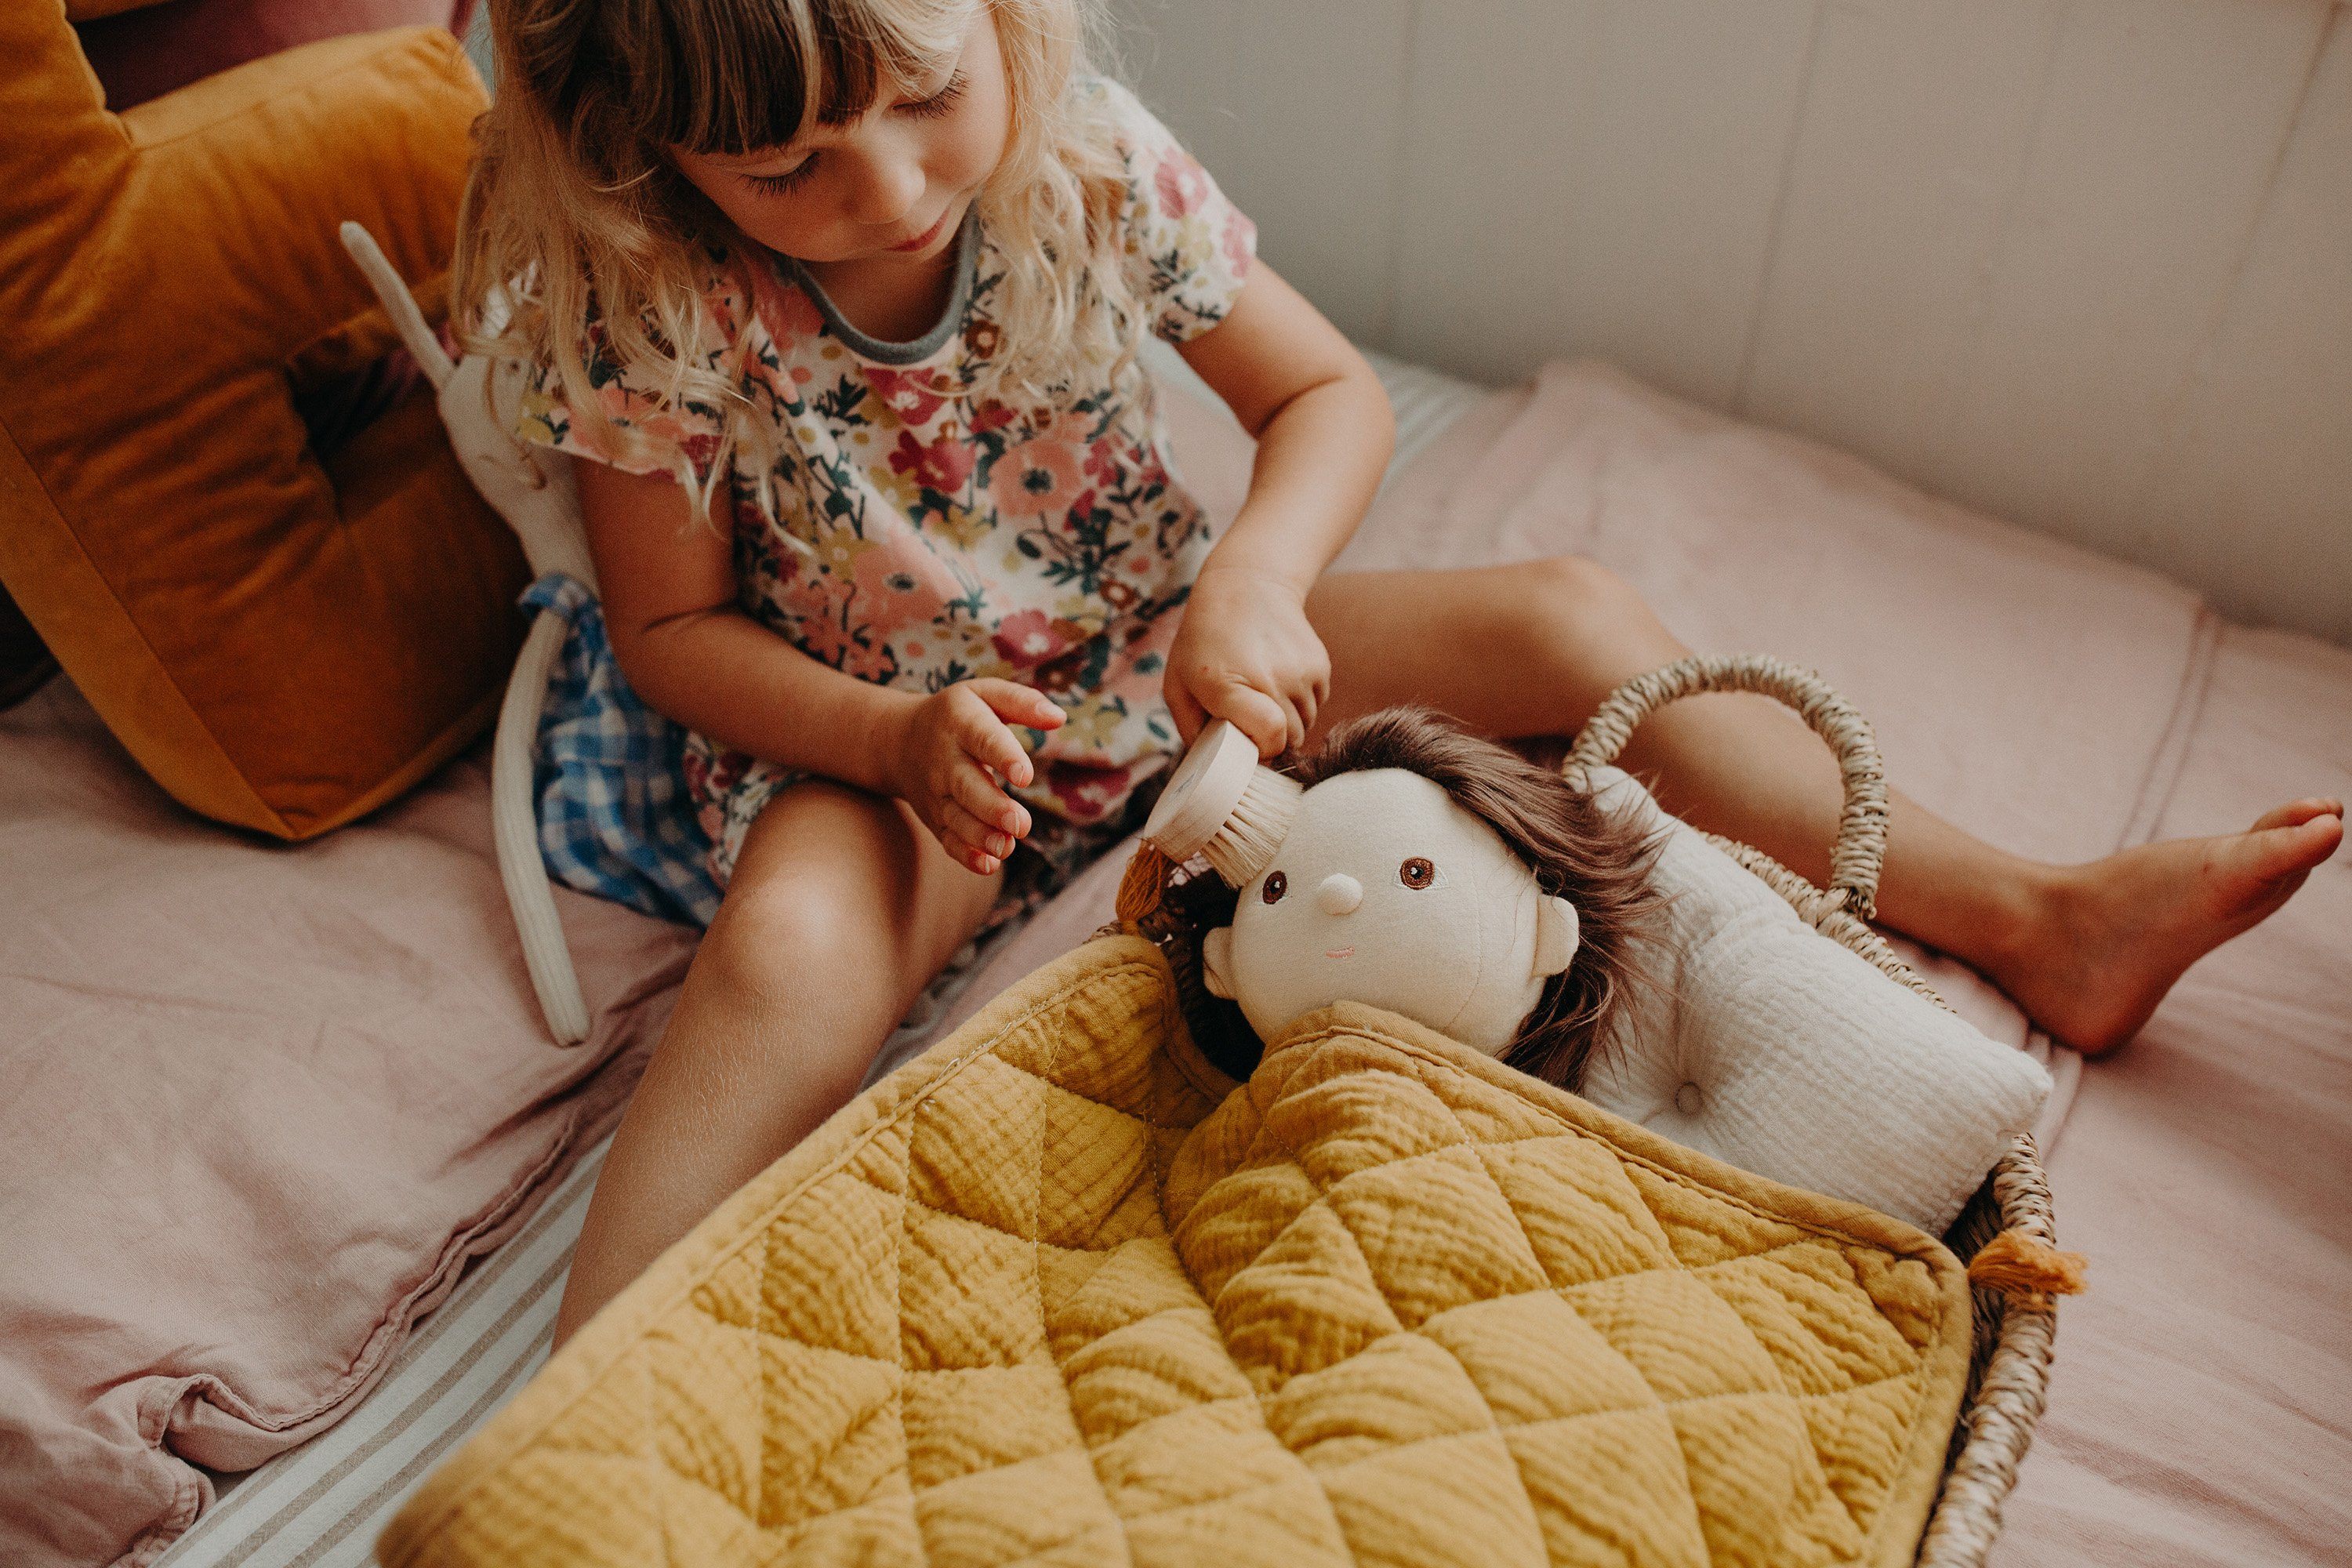 Organic cotton strolley bedset - Mustard - Olli Ella